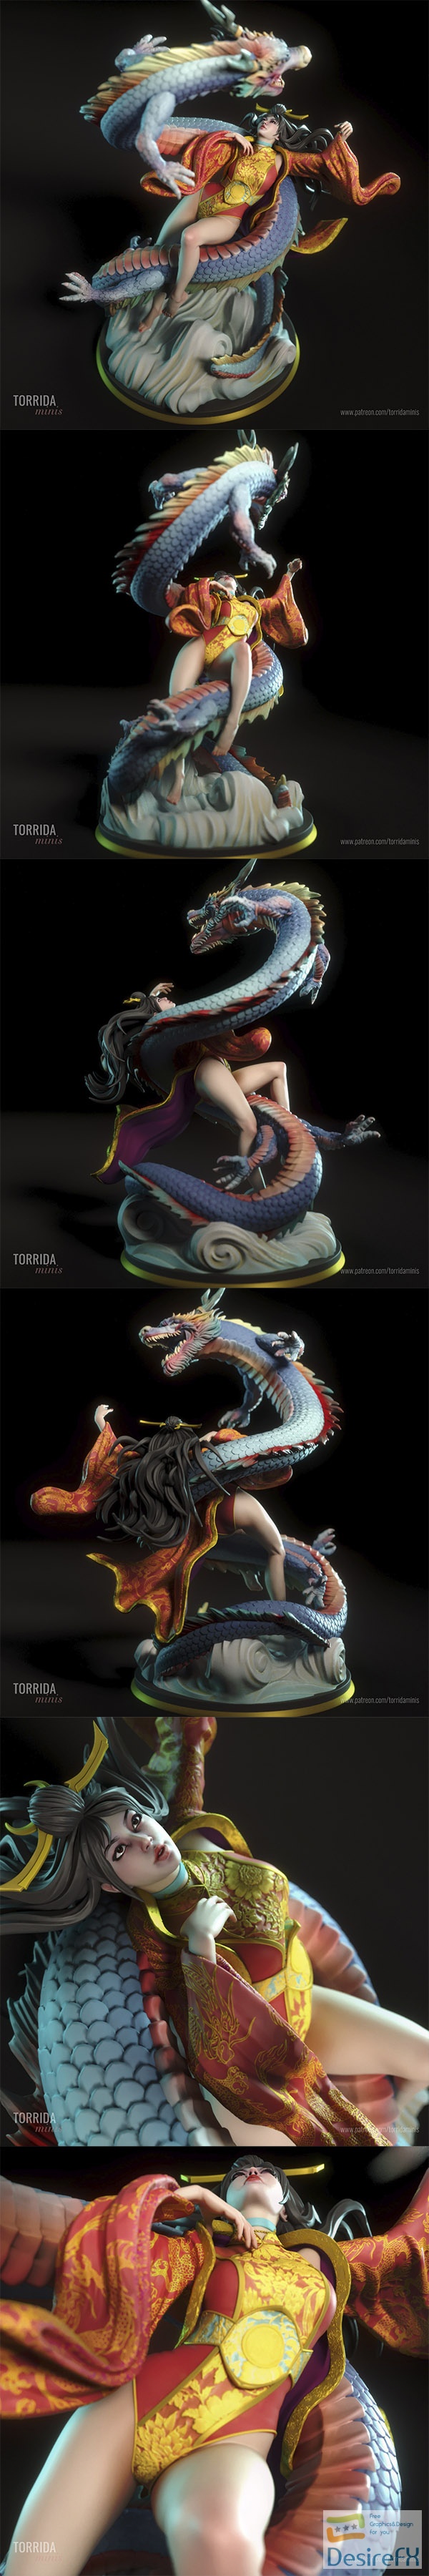 Torrida Minis – Yahui and the Dragon – 3D Print